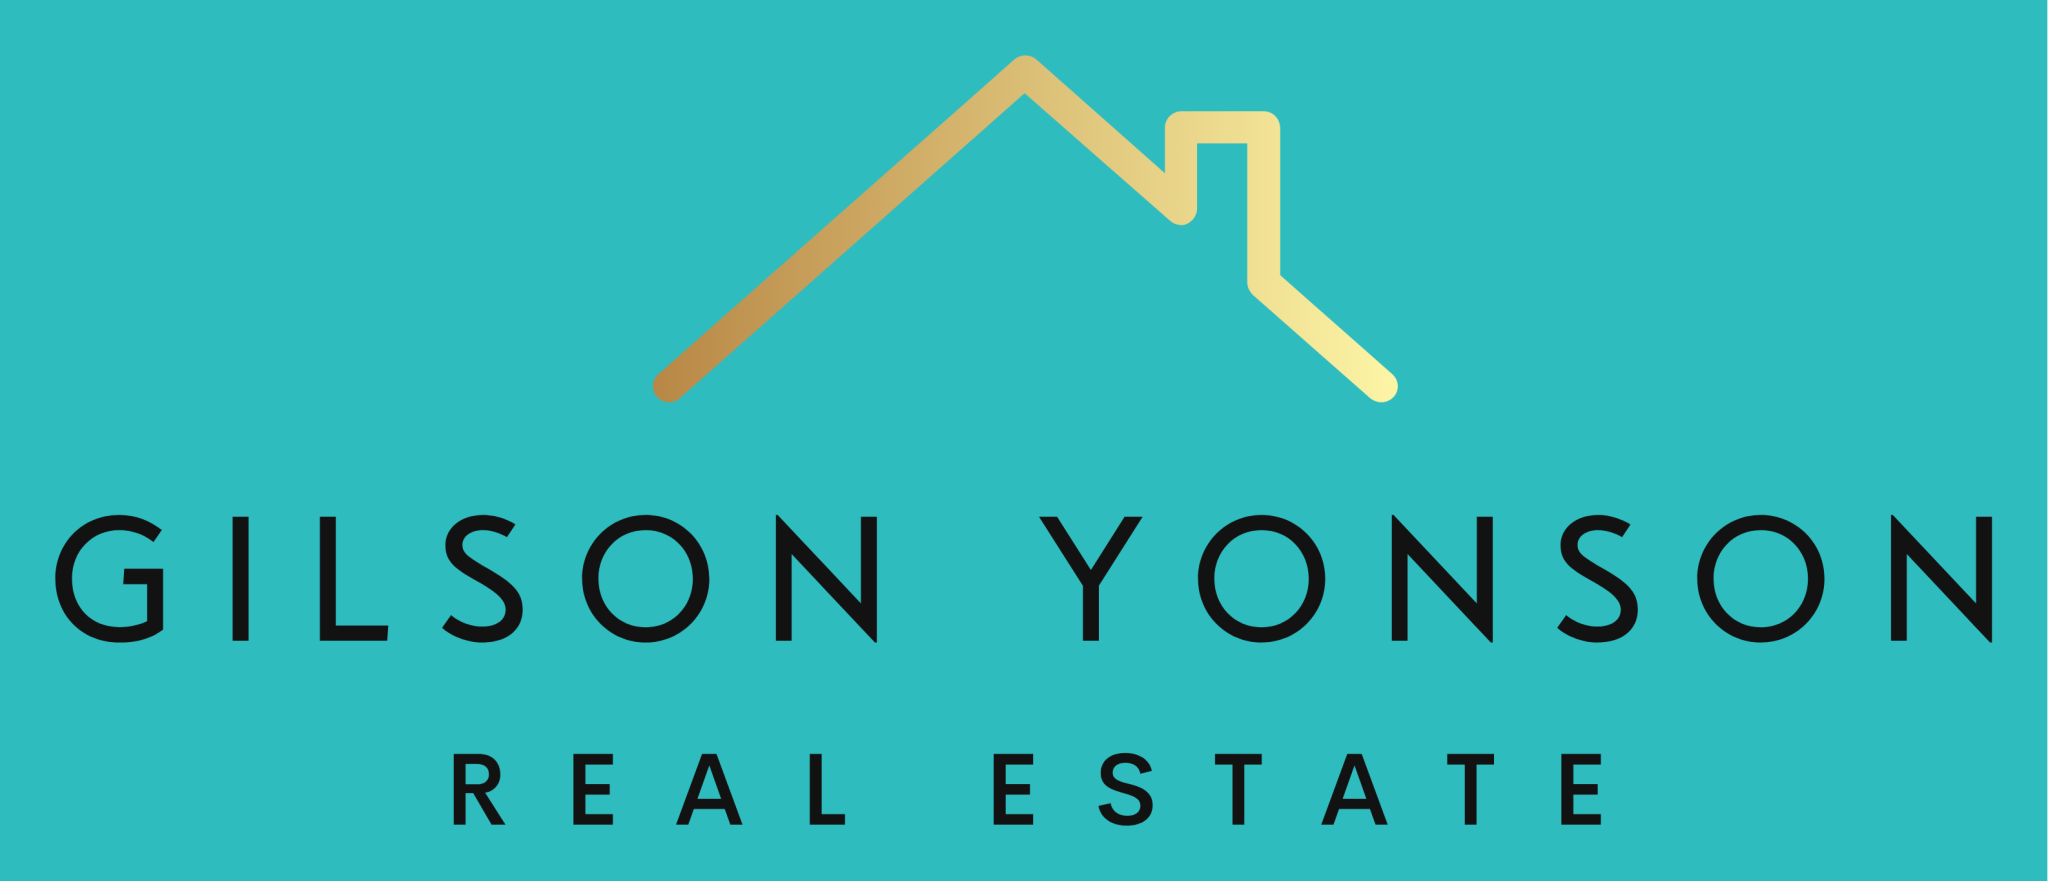 Rudy Yonson Real Estate - North Albury